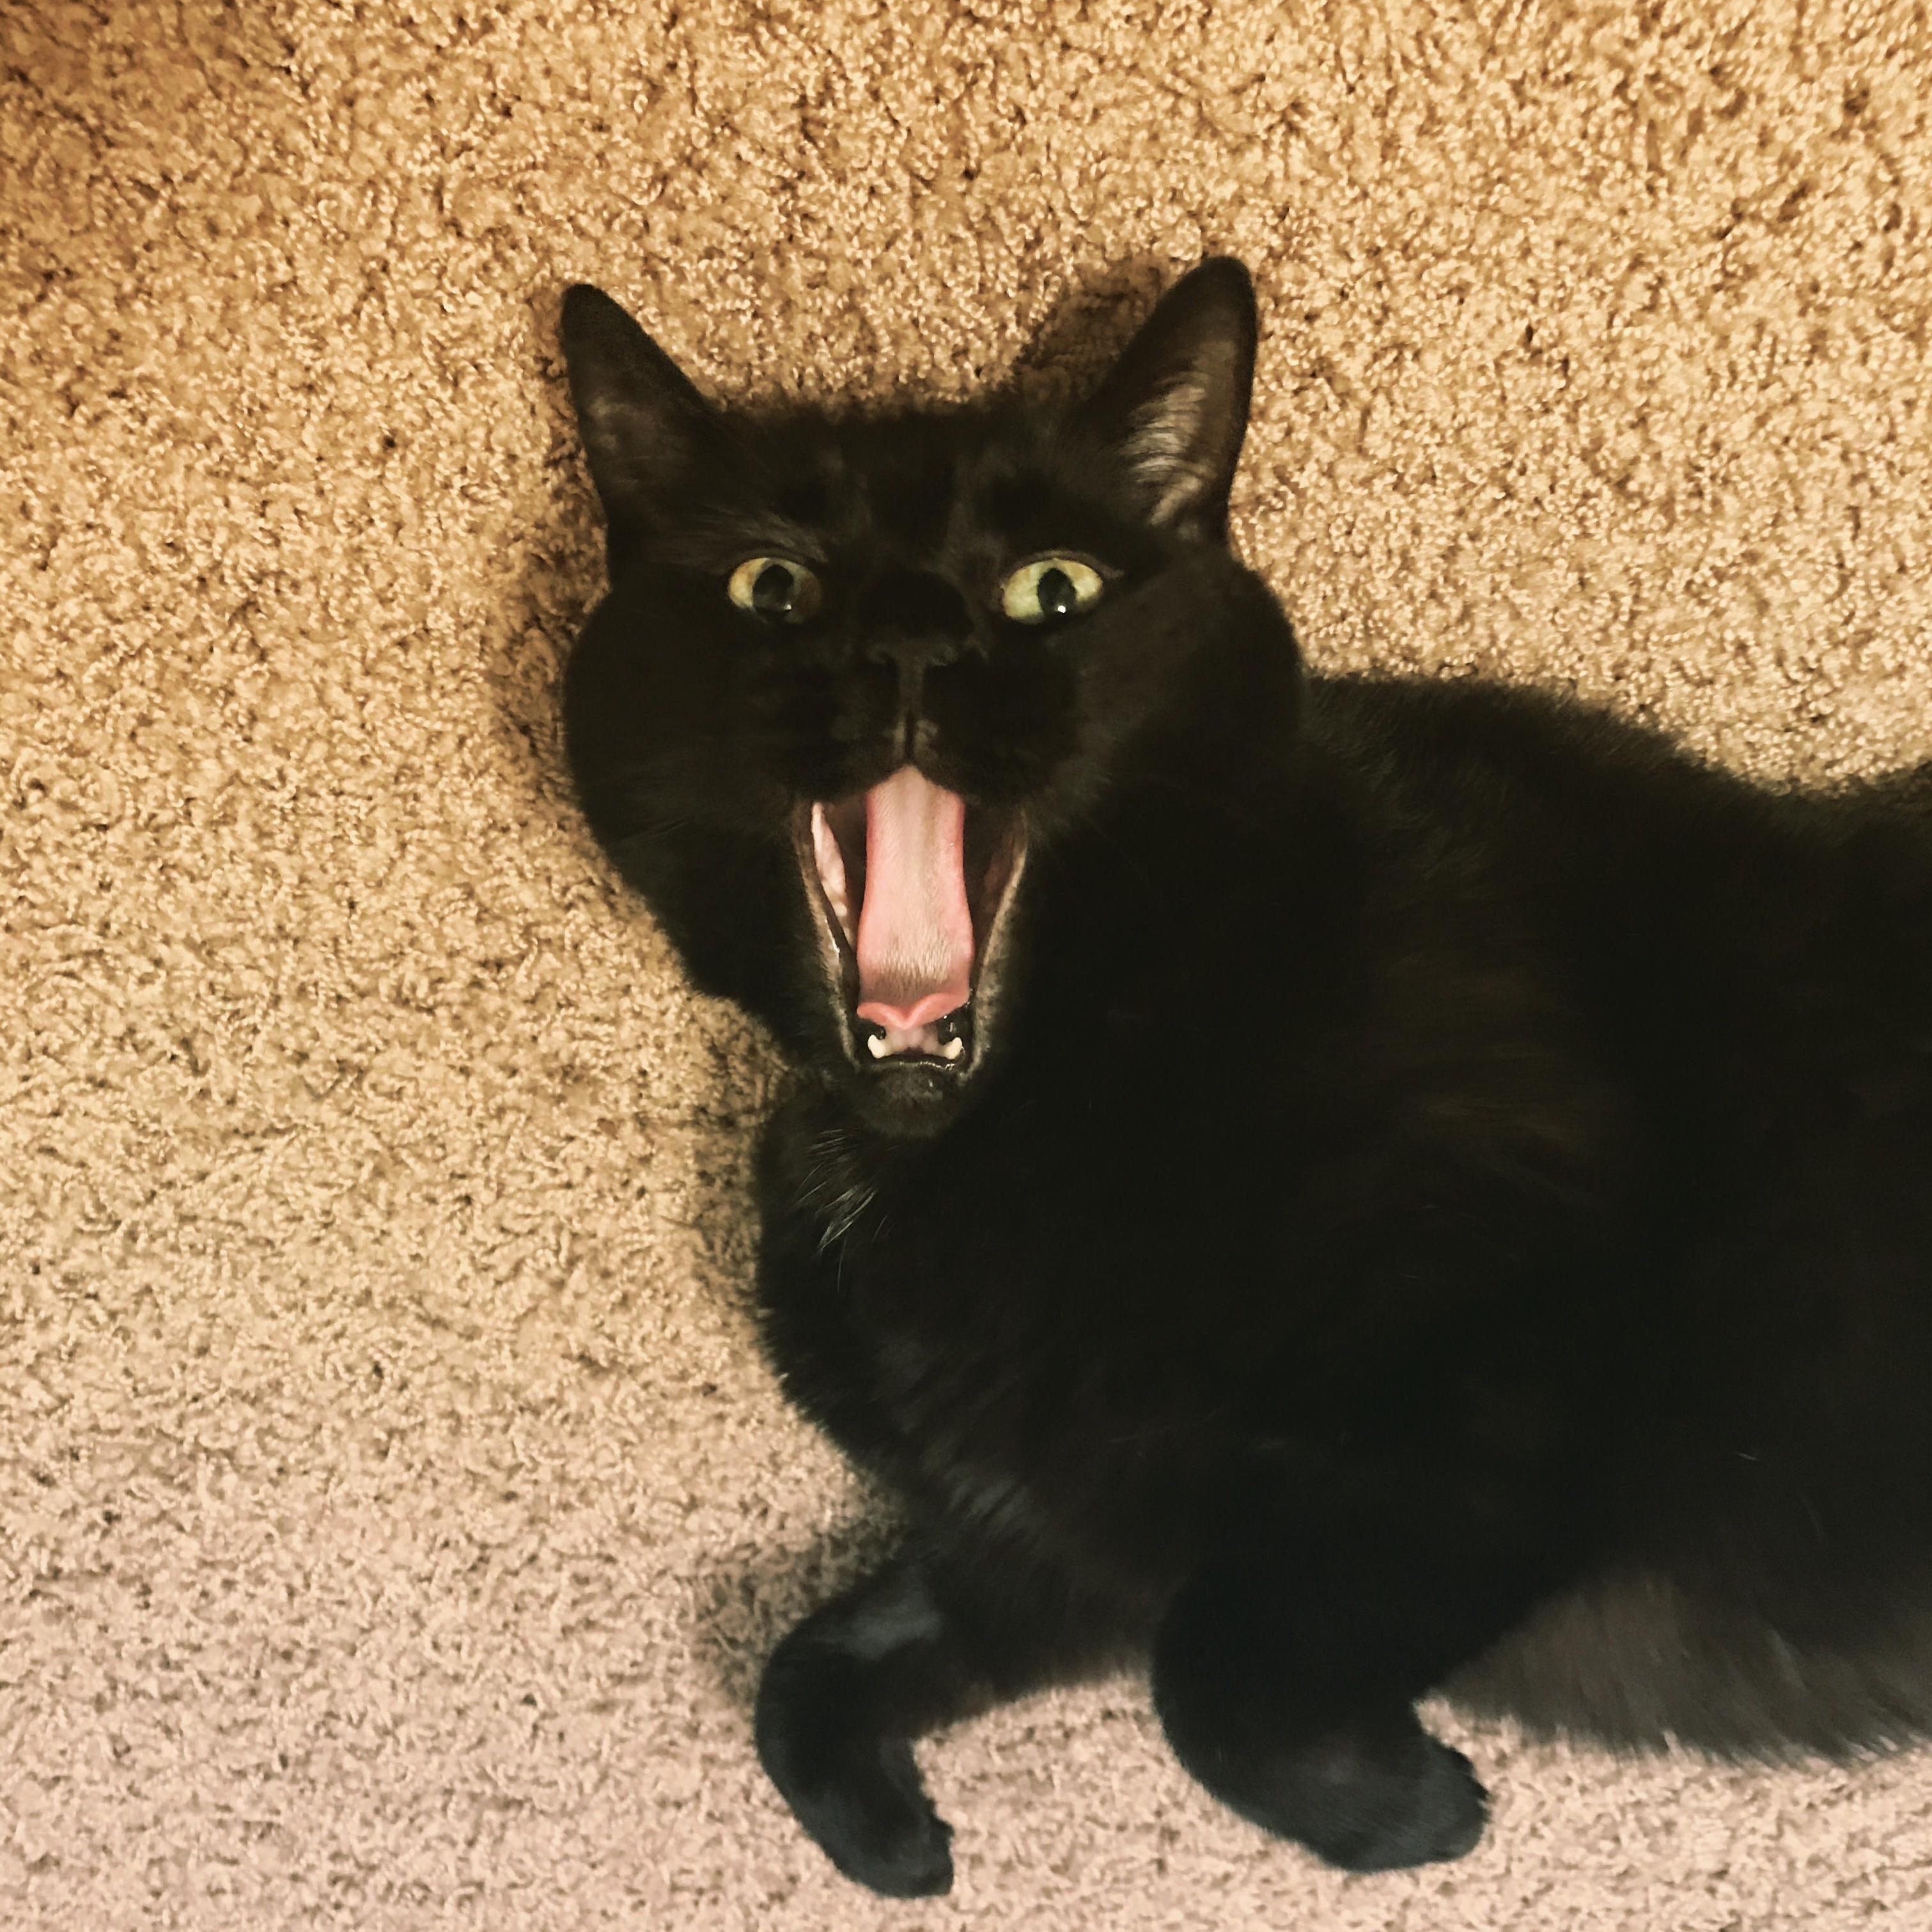 Caught the hellcat mid yawn